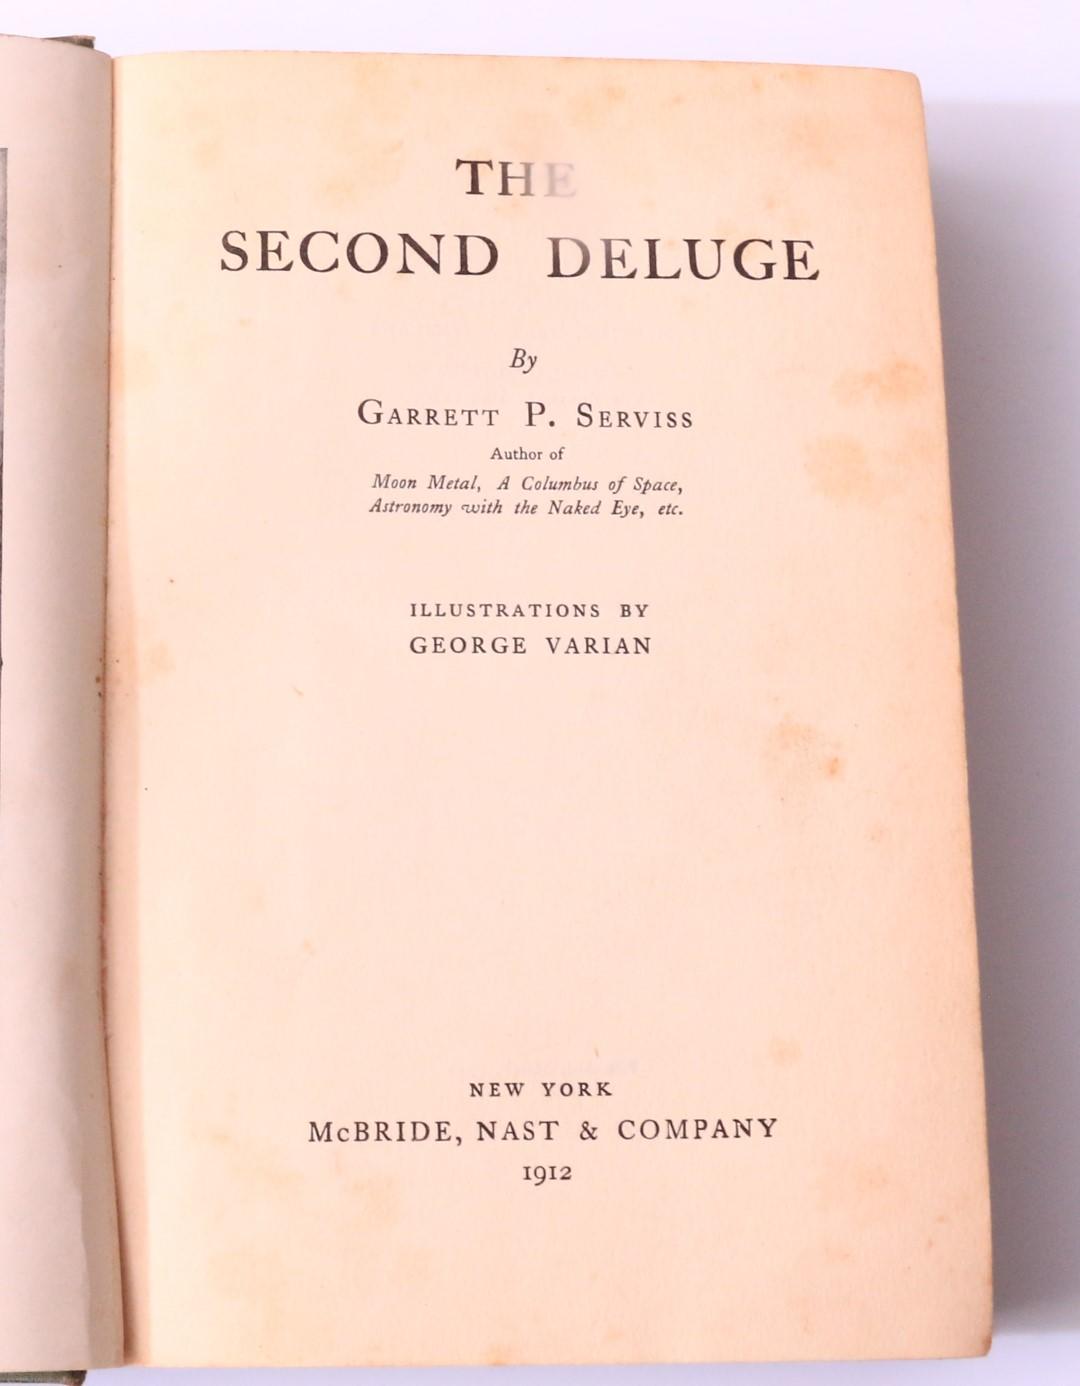 Garrett P. Serviss - The Second Deluge - McBride, Nast & Co., 1912, First Edition.